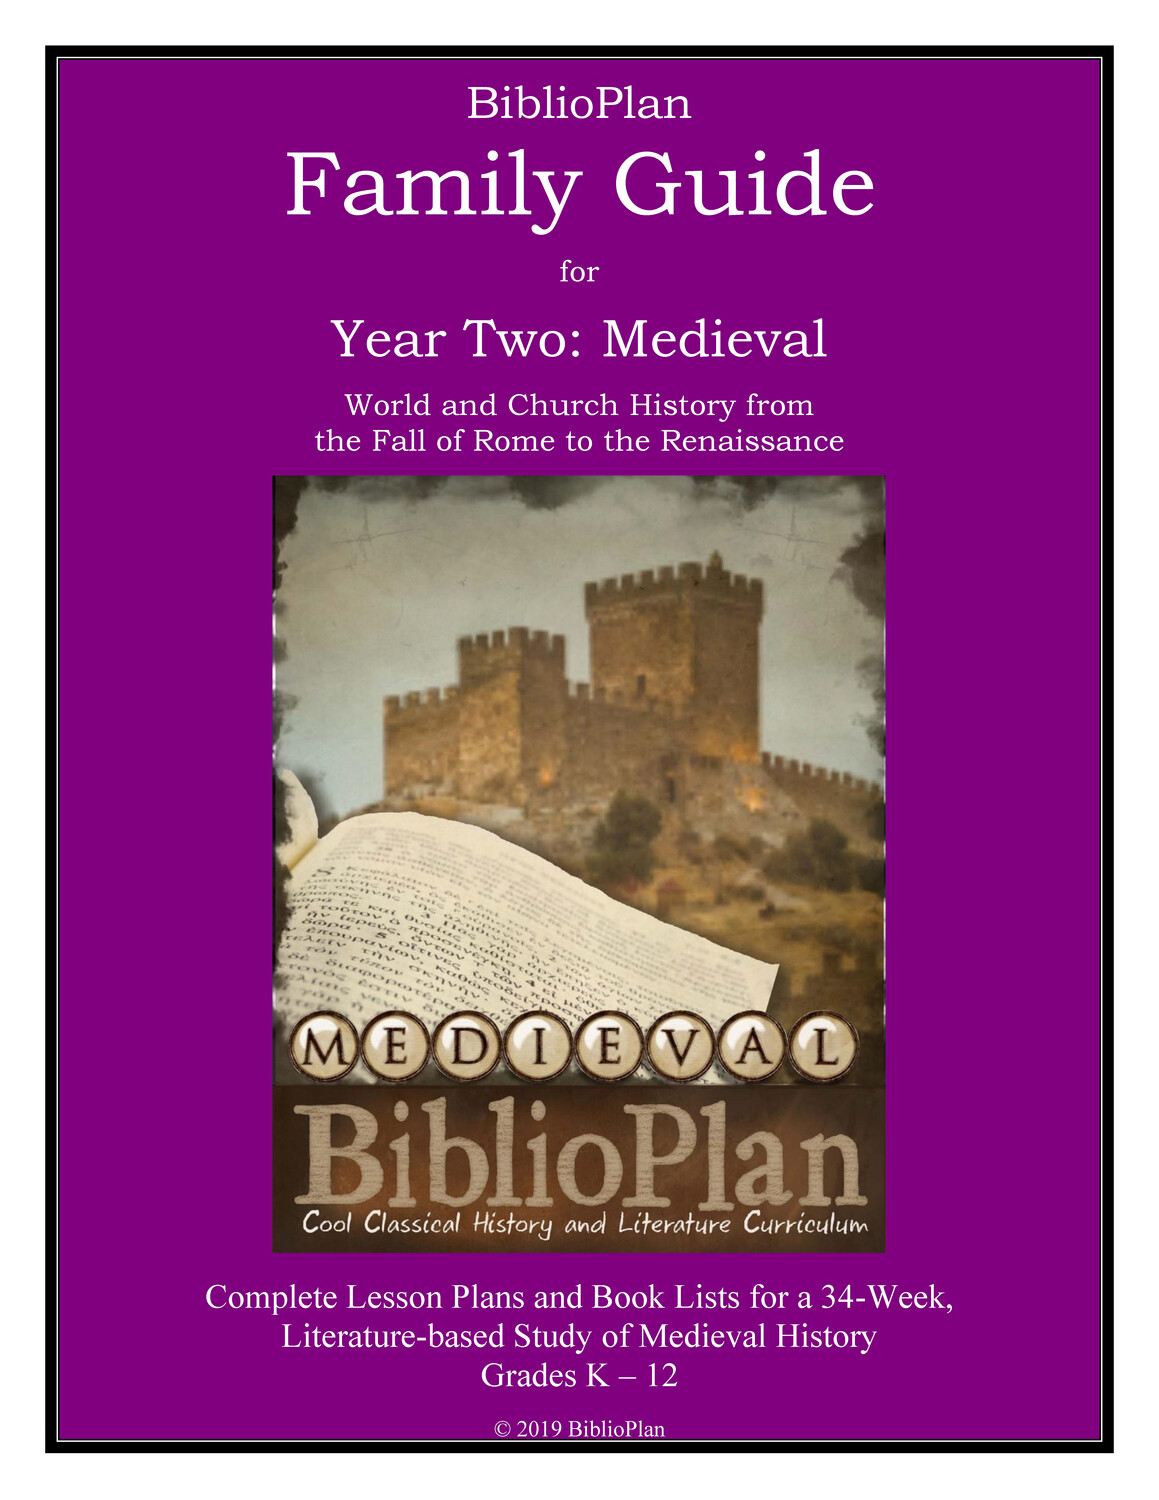 Medieval Family Guide Hardcopy